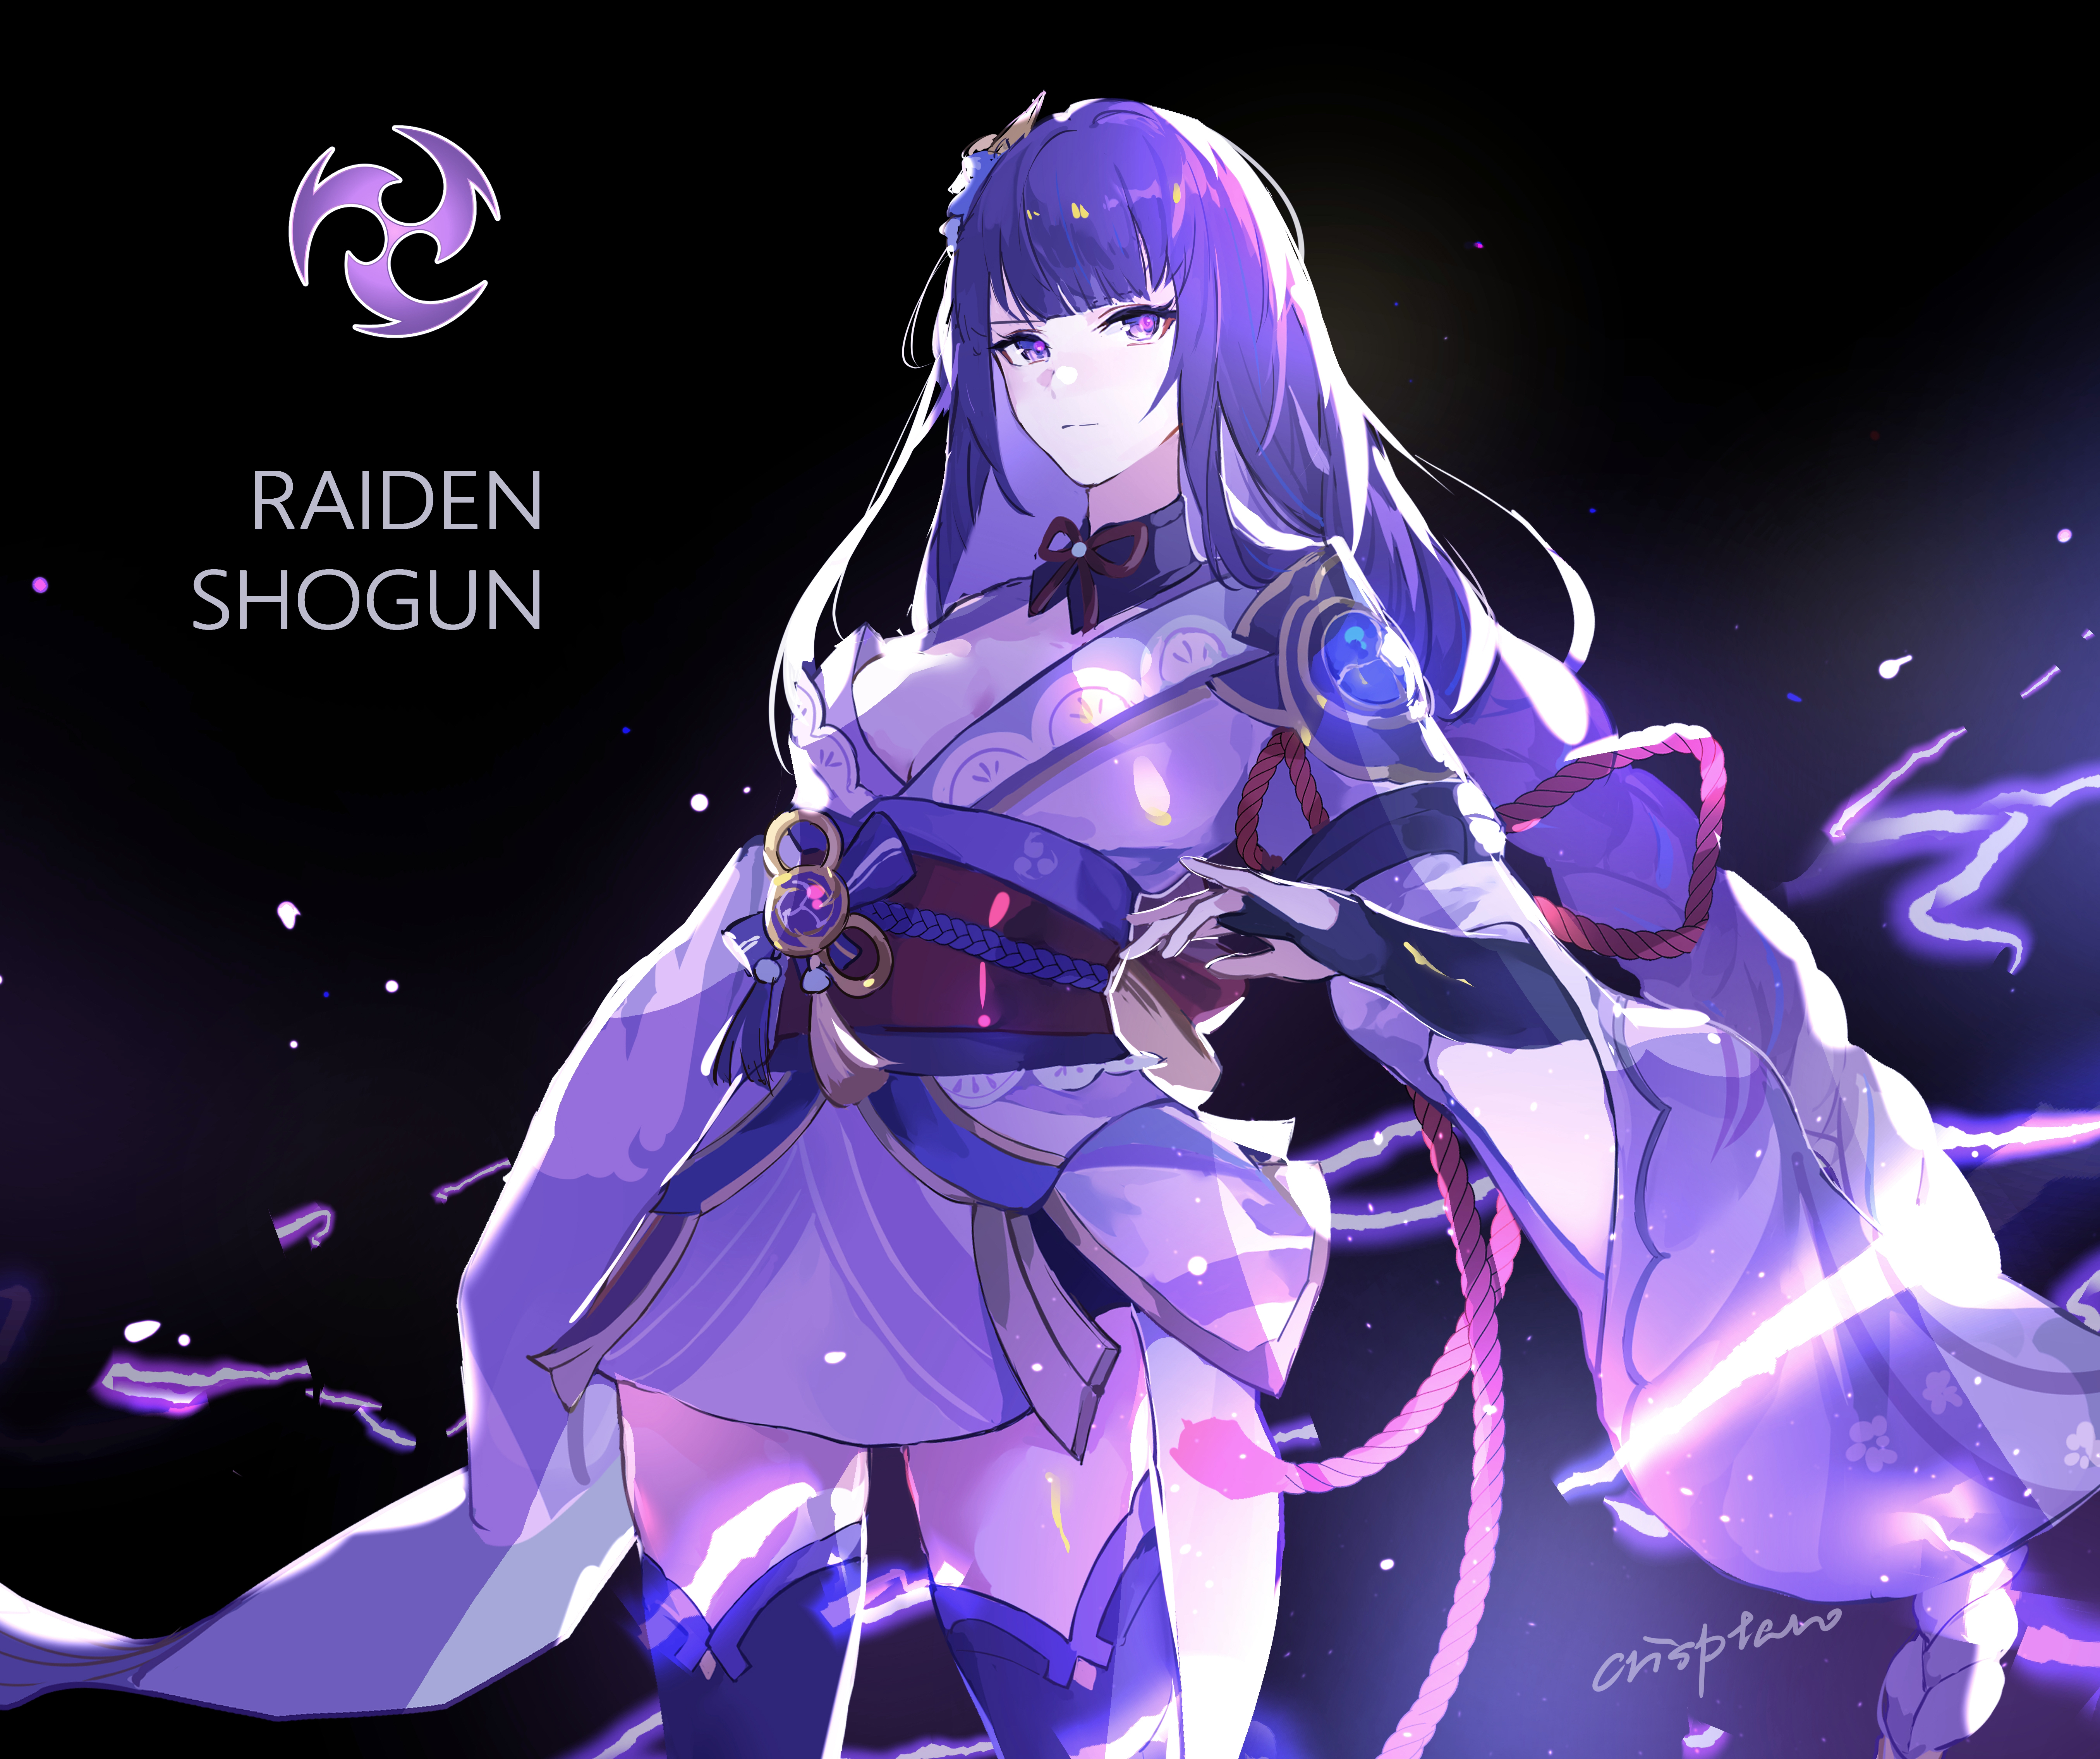 Baal Raiden Shogun Genshin Impact 5423x4543